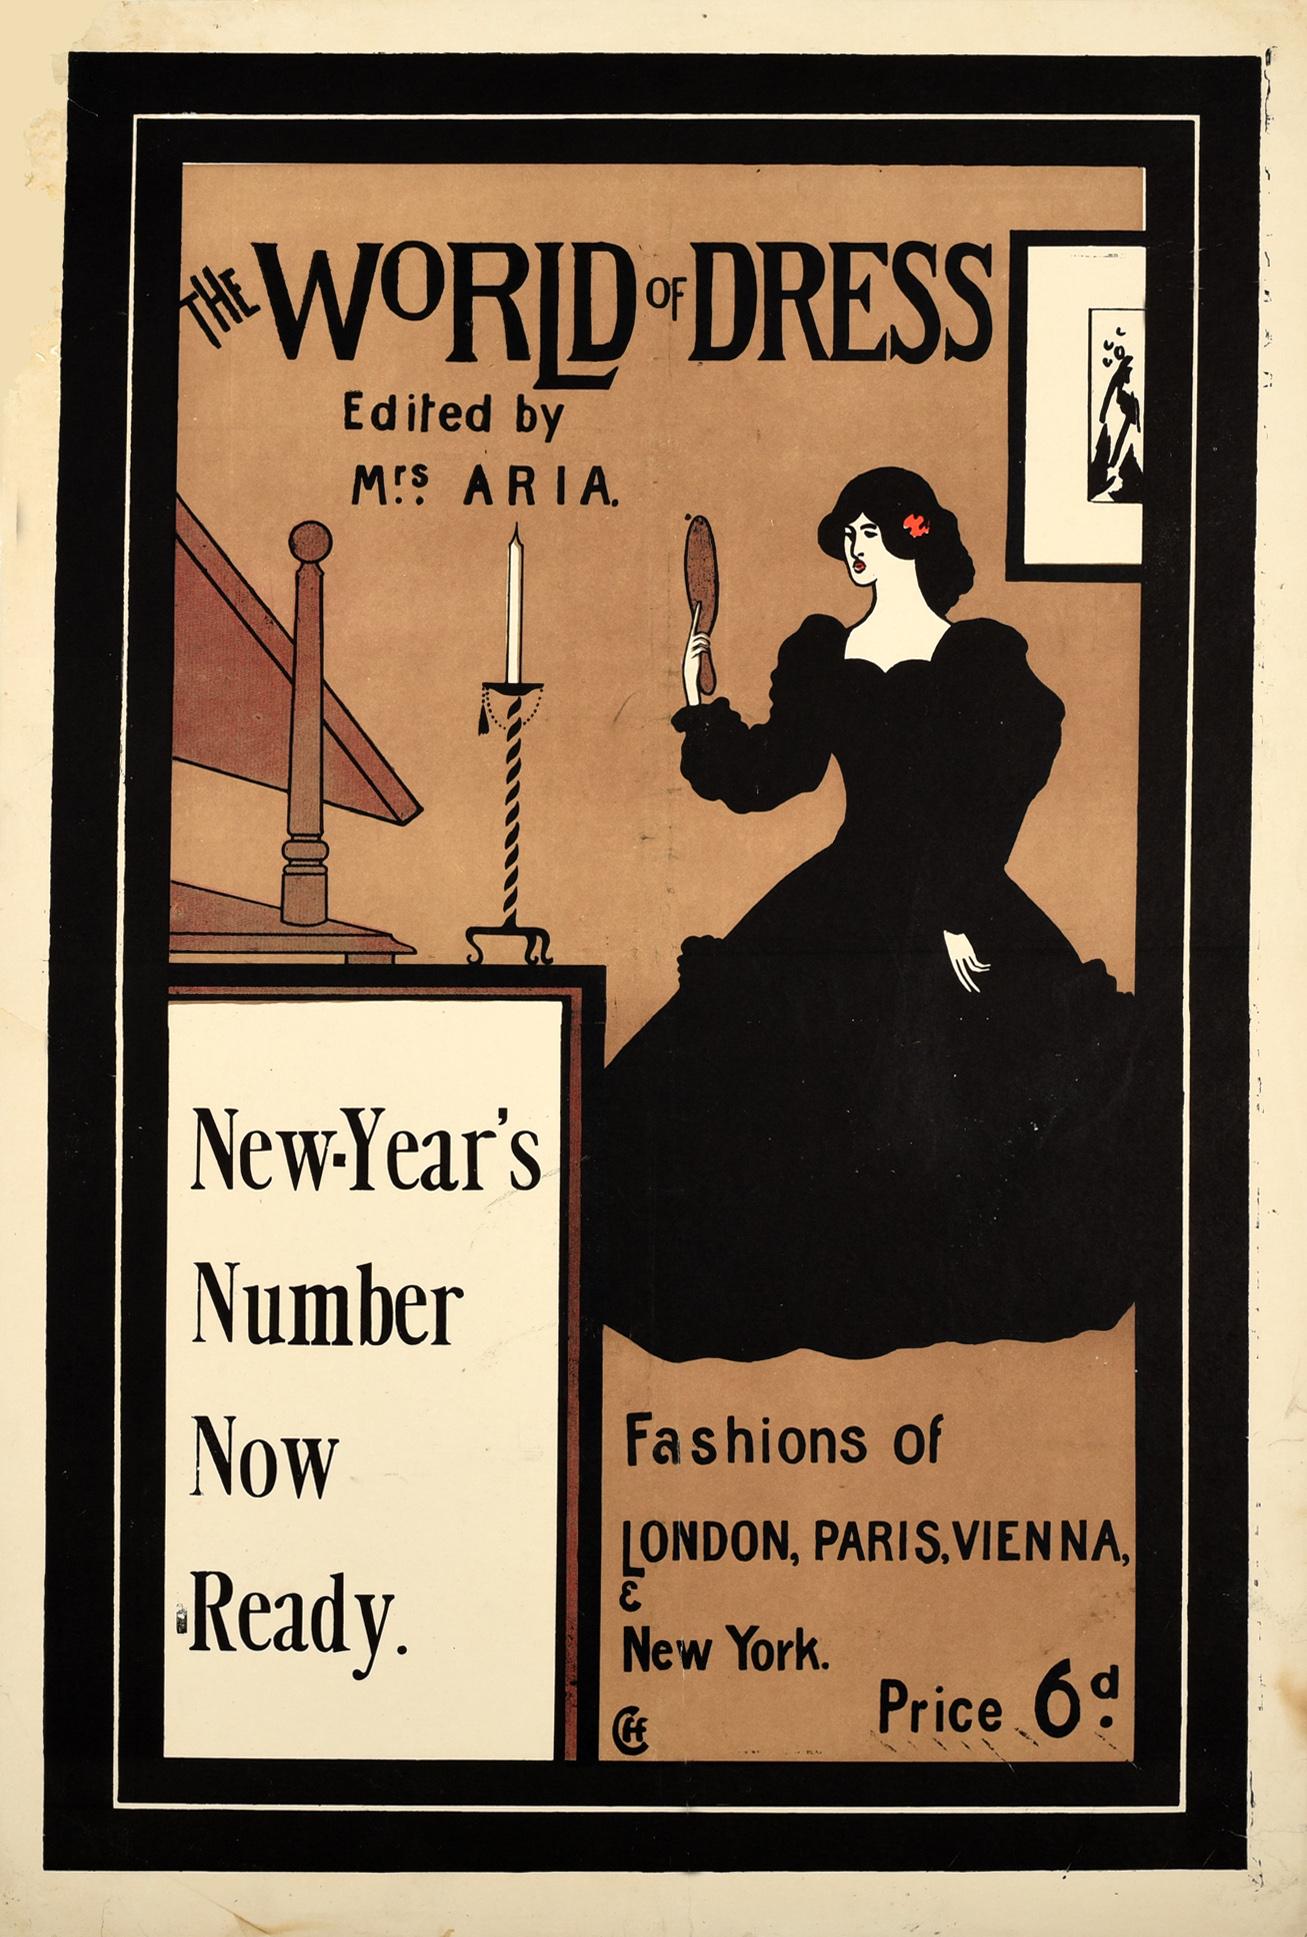 C. Foulkes Print - Original Antique Poster The World Of Dress Fashion London Paris Vienna New York